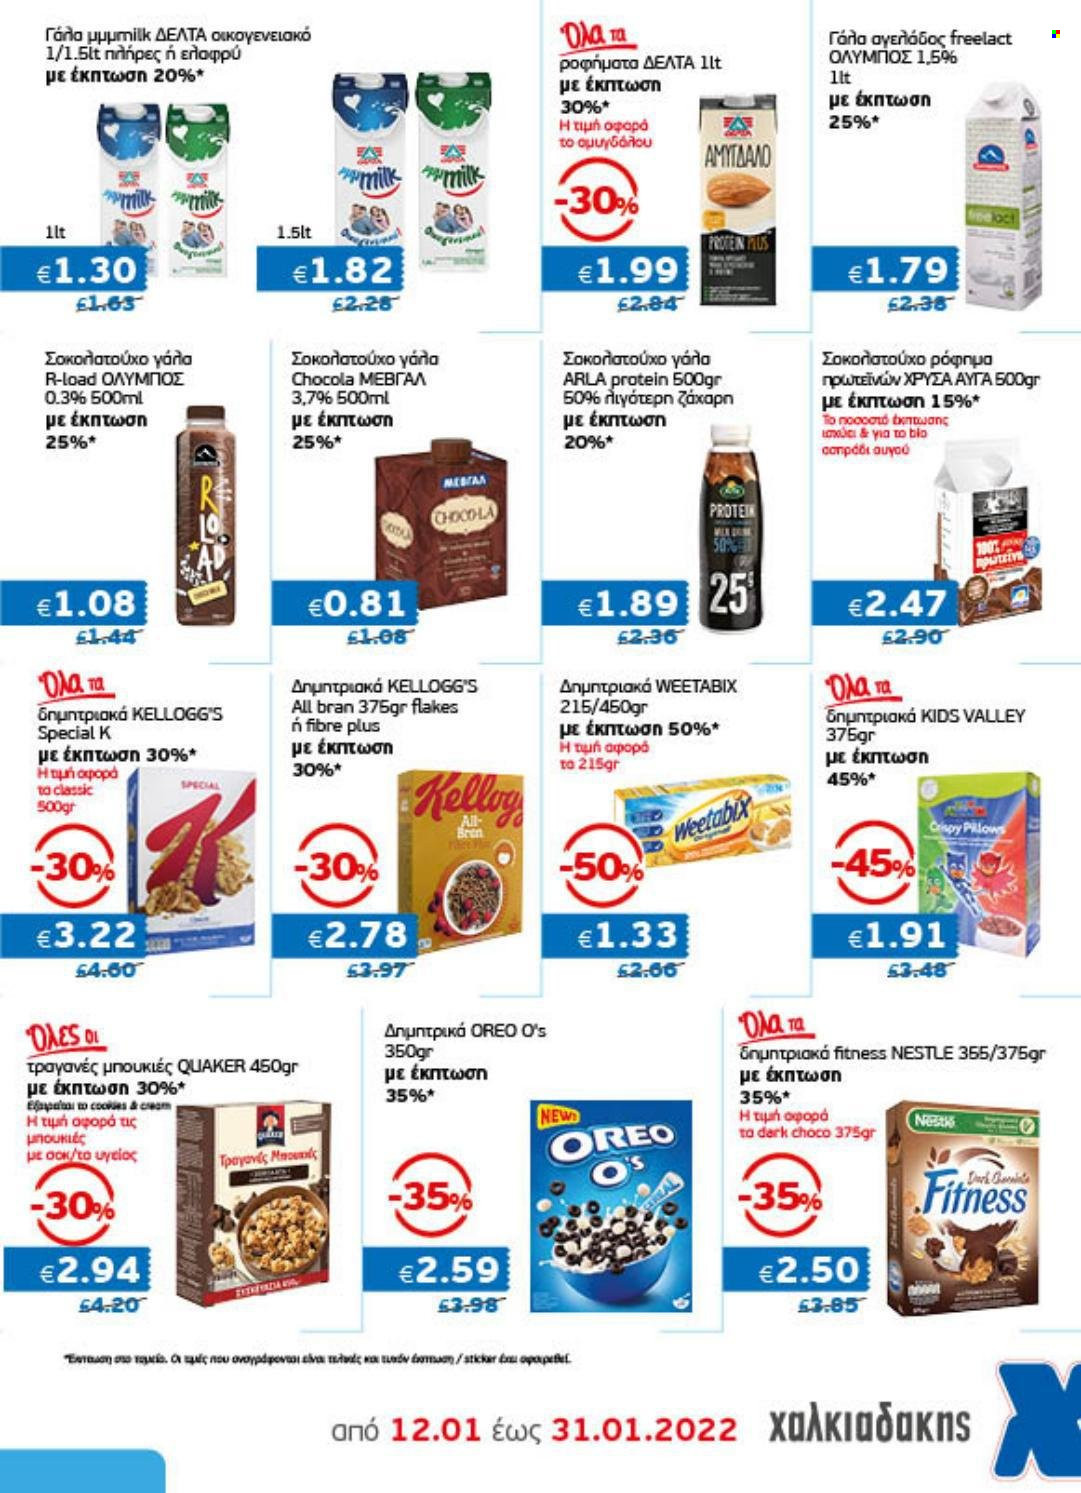 thumbnail - Φυλλάδια Χαλκιαδάκης - 12.01.2022 - 31.01.2022 - Εκπτωτικά προϊόντα - Oreo, γάλα, σοκολατούχο γάλα, Nestlé, Kellogg's. Σελίδα 13.